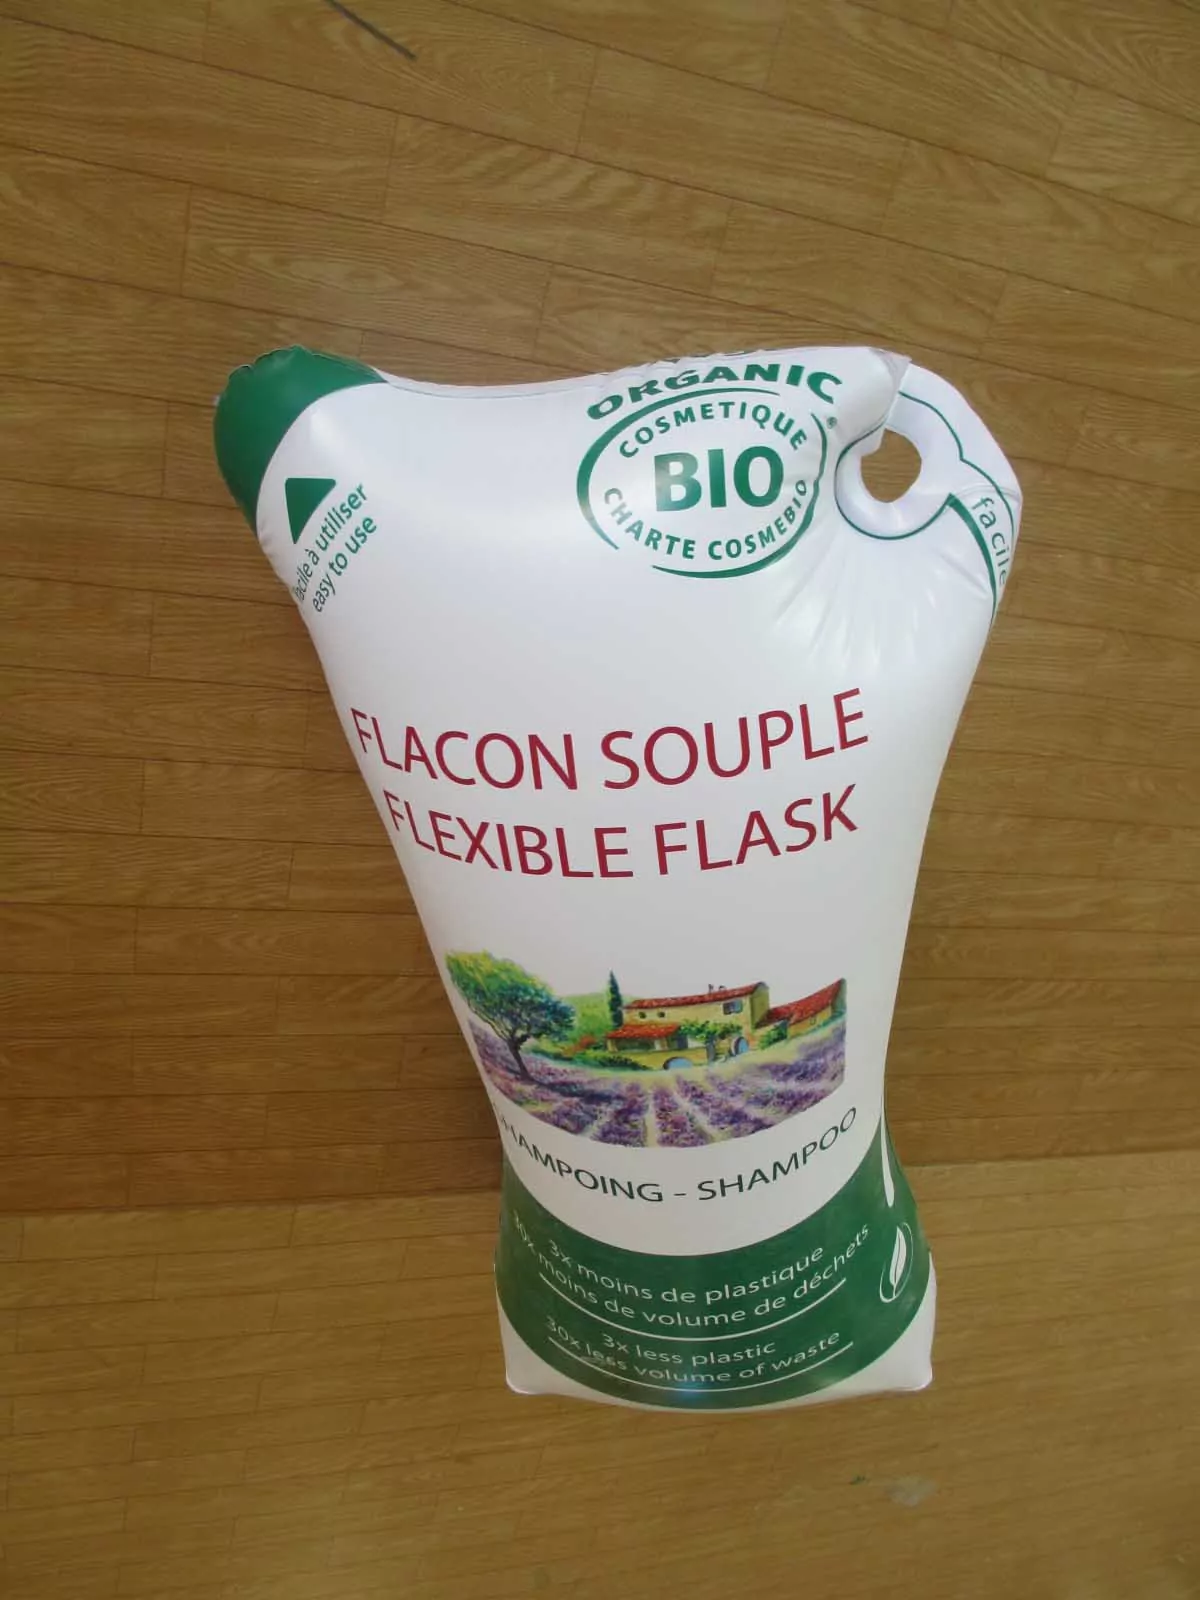 flacon souple flexible flask : plv packaging pour magasin